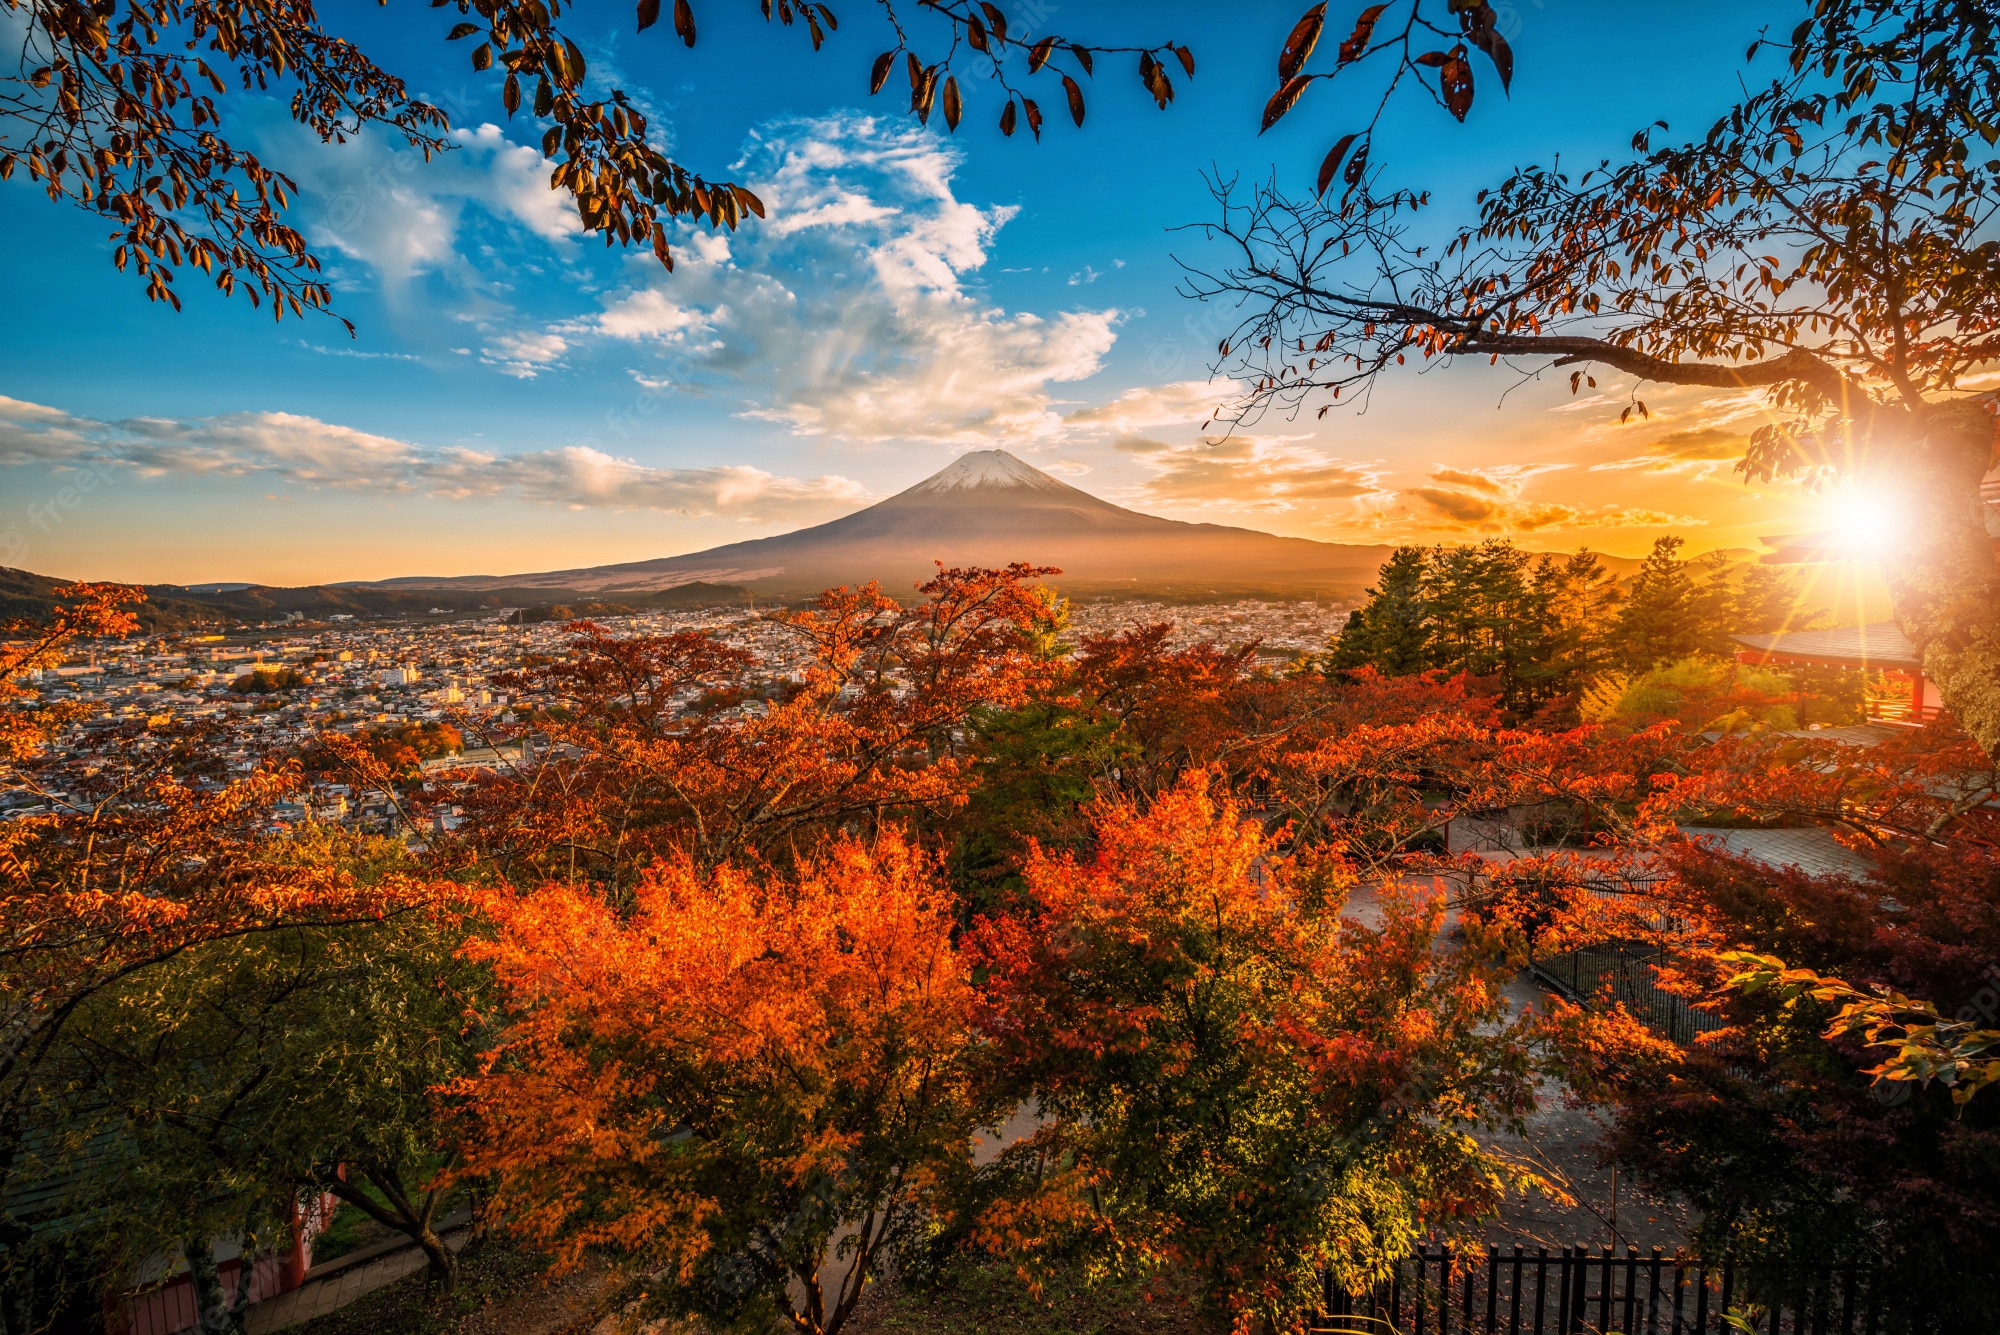 Premium Photo. Mt. fuji with red leaf in the autumn on sunset at fujiyoshida, japan